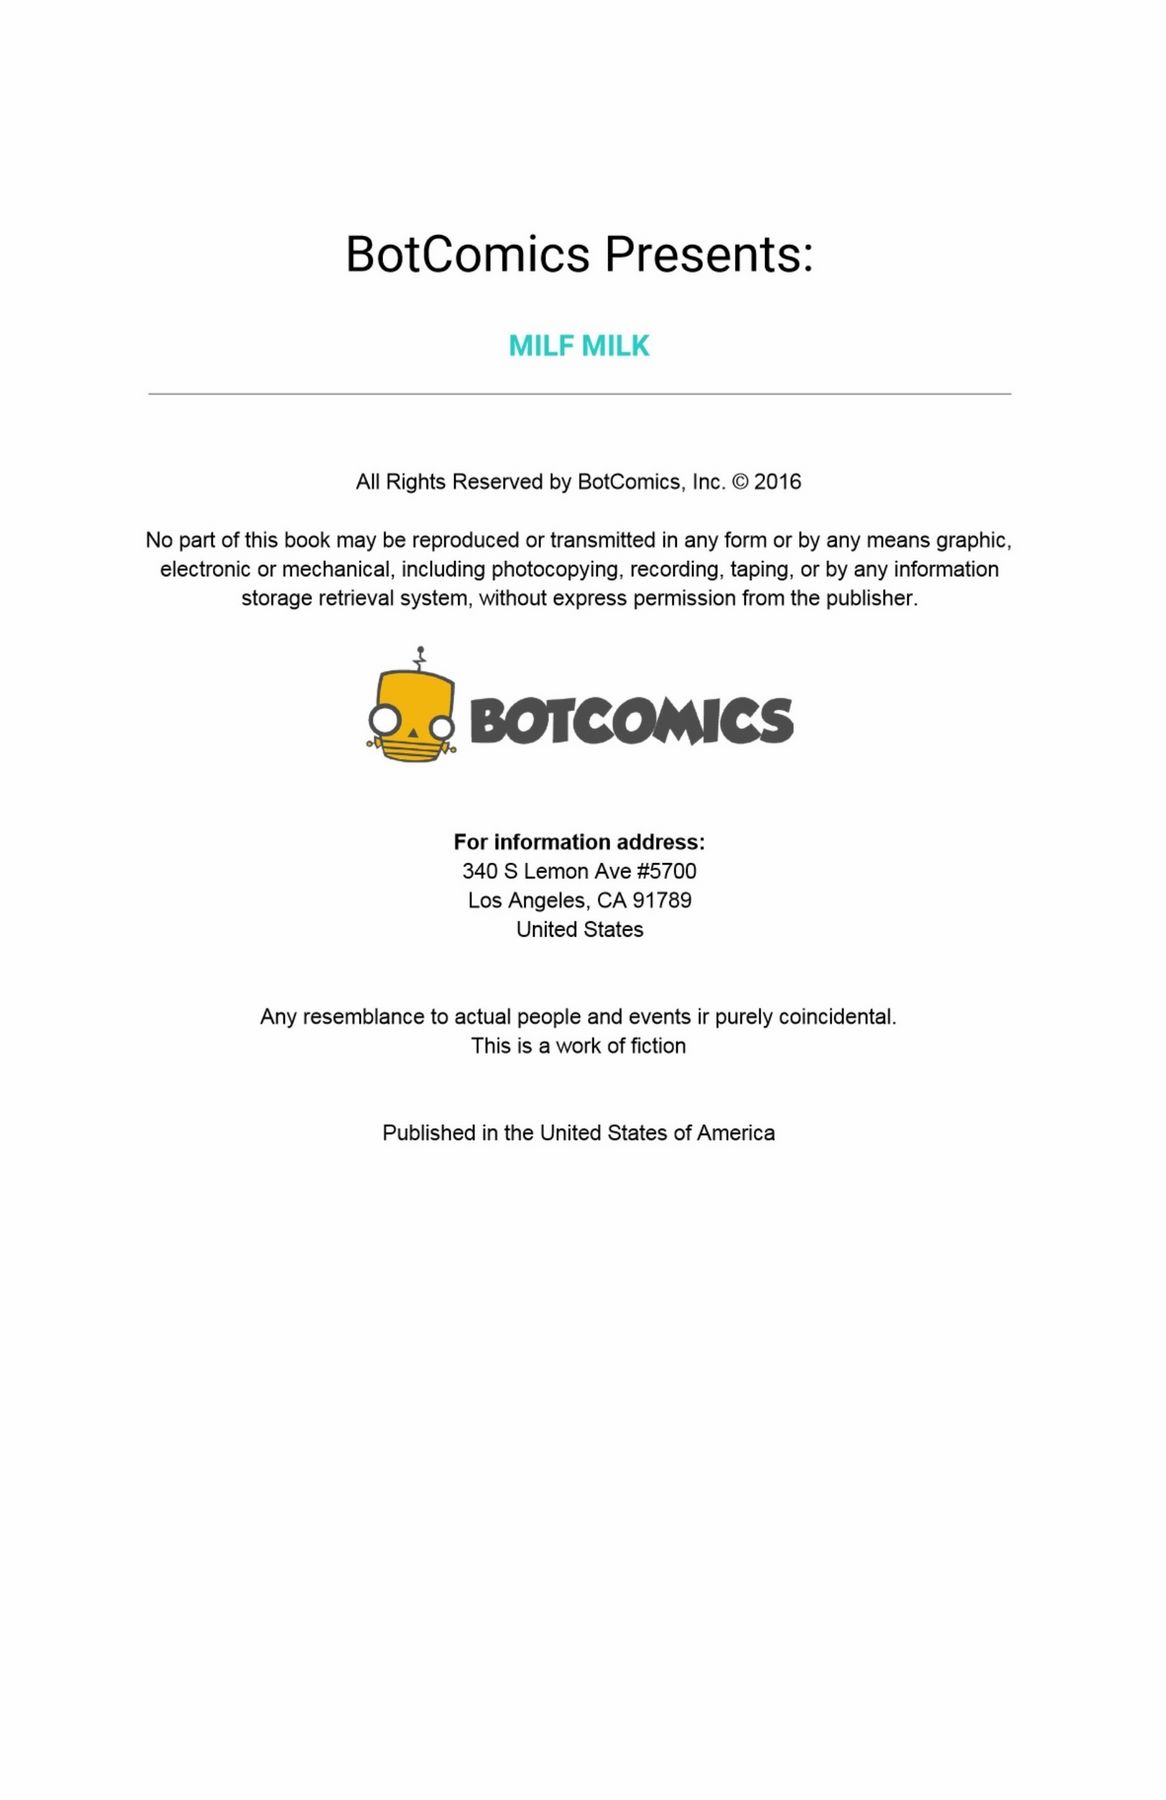 Milf Milk Issue 03 BotComics page 2